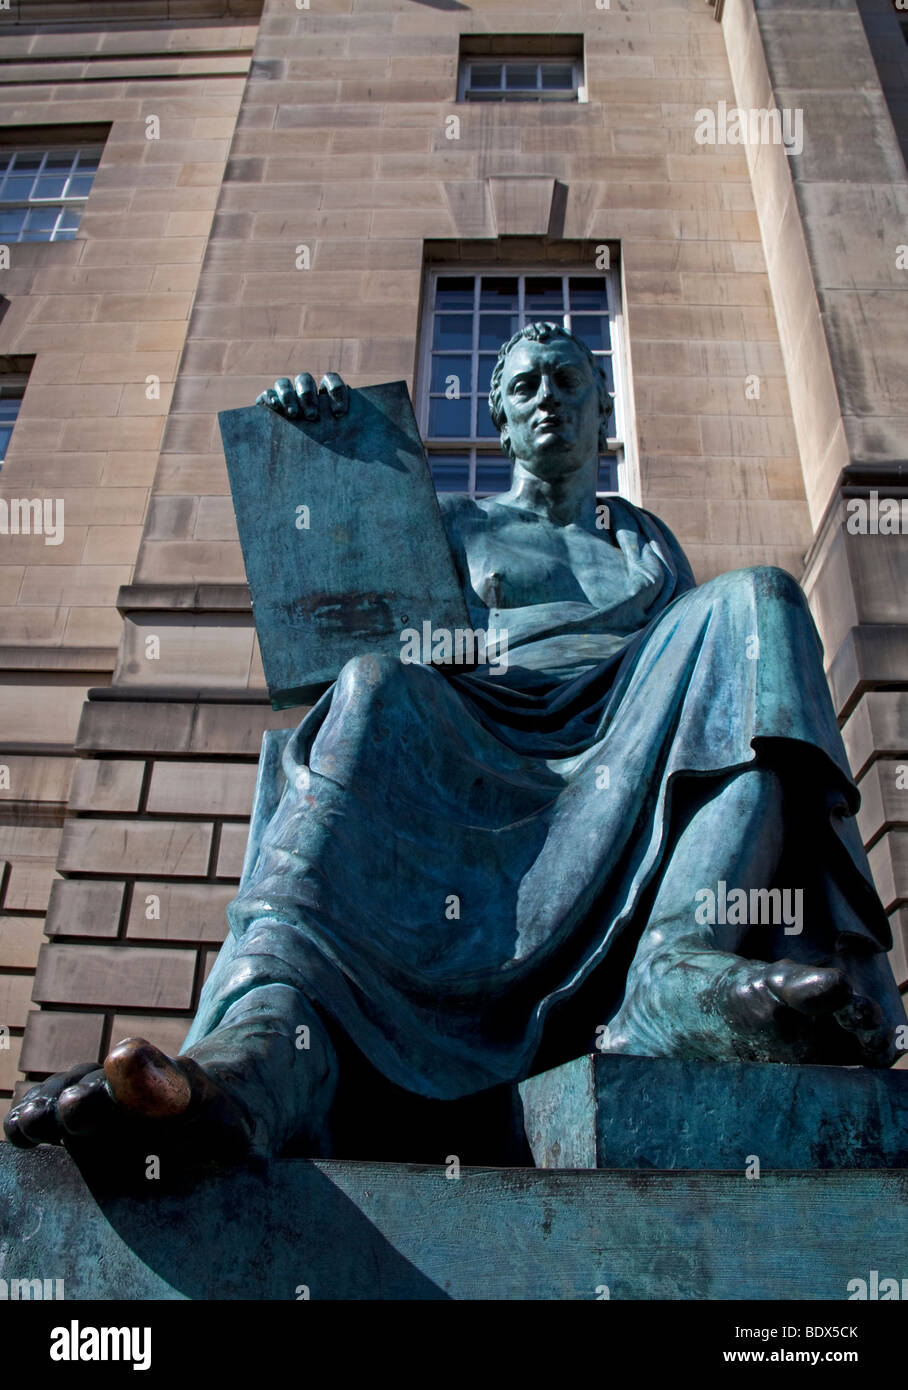 David Hume bronze Statue Edinburgh Royal Mile, Scotland, UK, Europe Stock Photo